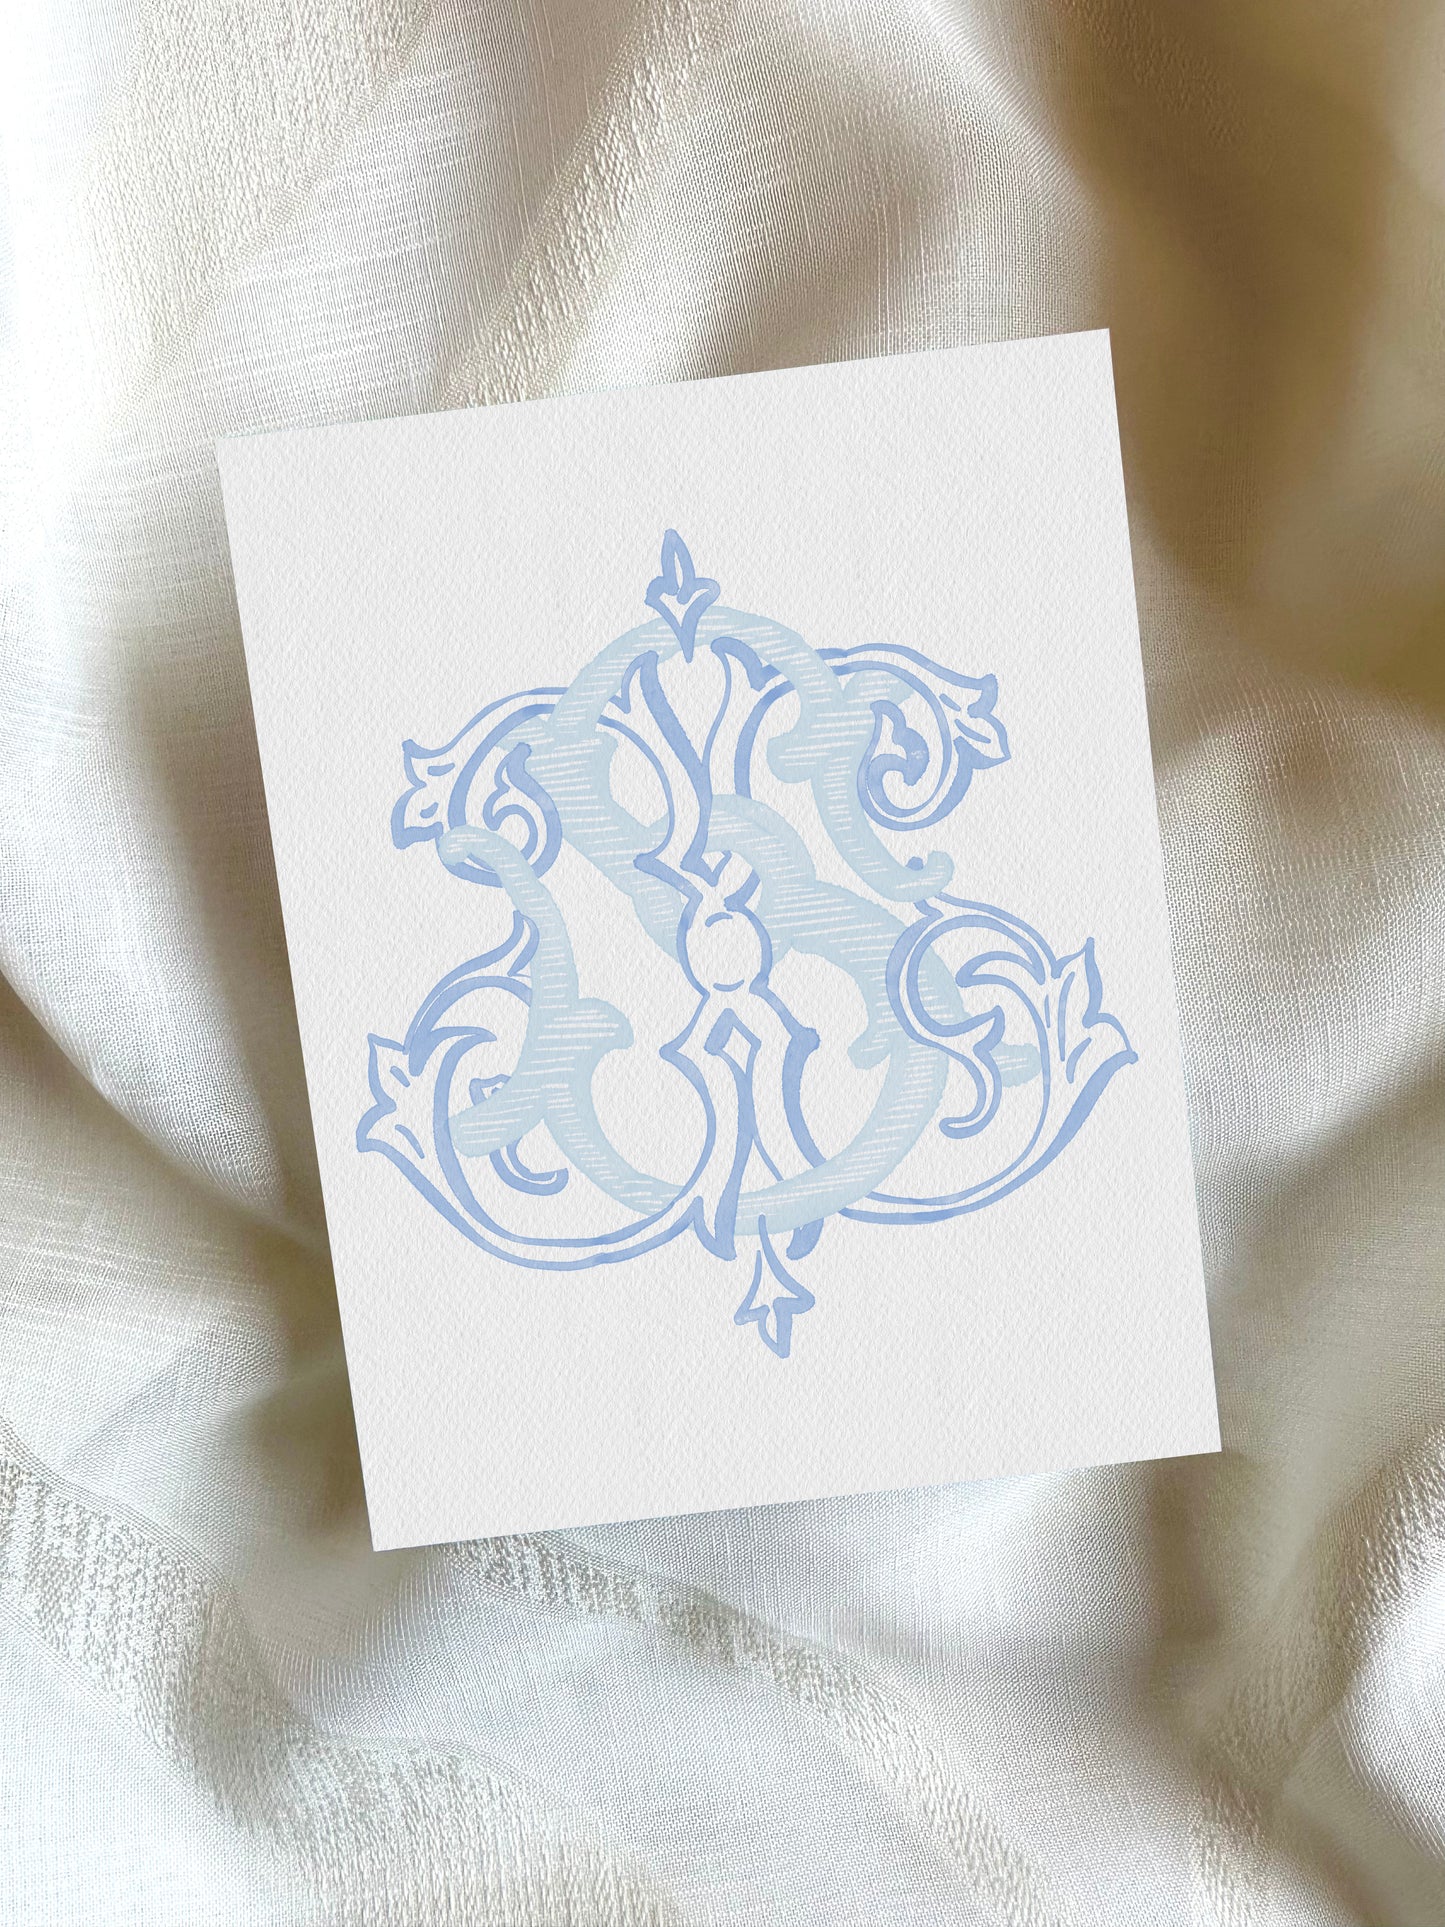 2 Letter Monogram with Letters SX XS | Digital Download - Wedding Monogram SVG, Personal Logo, Wedding Logo for Wedding Invitations The Wedding Crest Lab